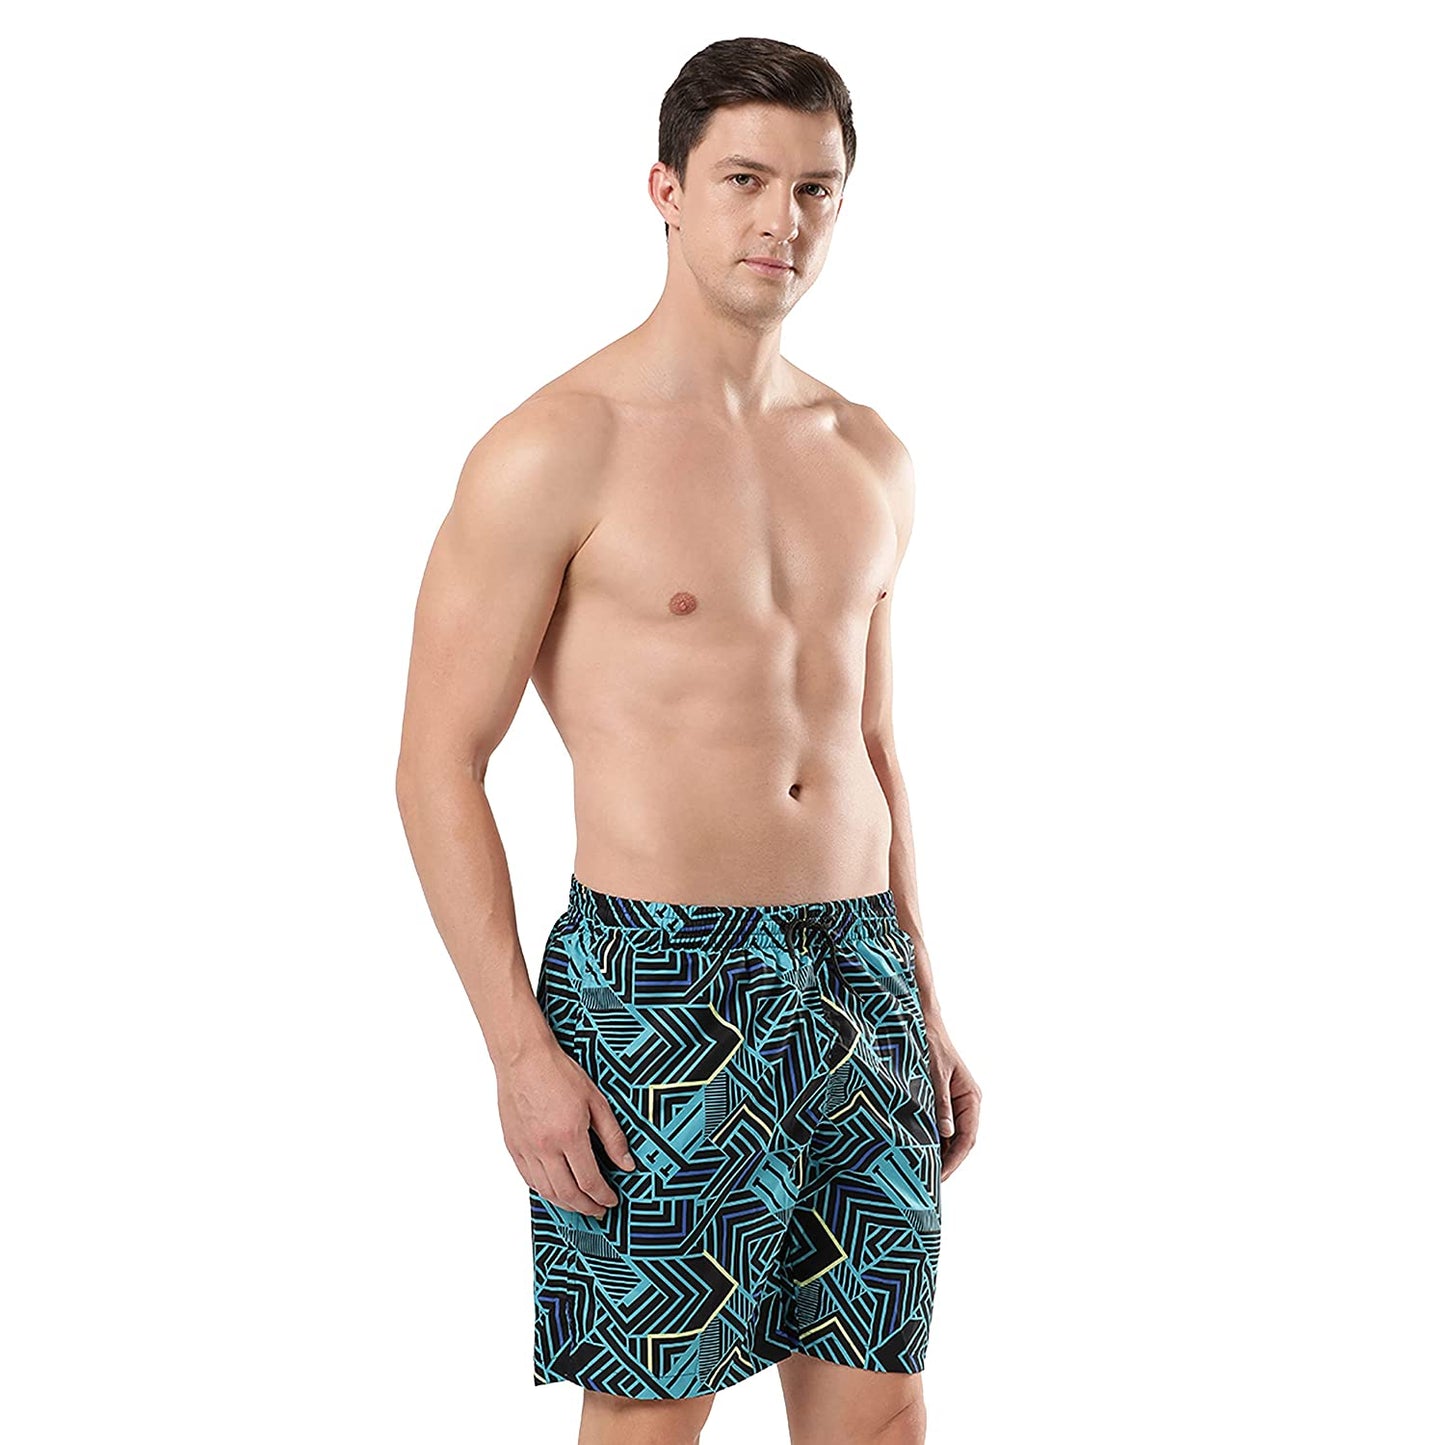 Speedo Essential Redondo Allover 18 Inch Water Shorts for Male - Best Price online Prokicksports.com